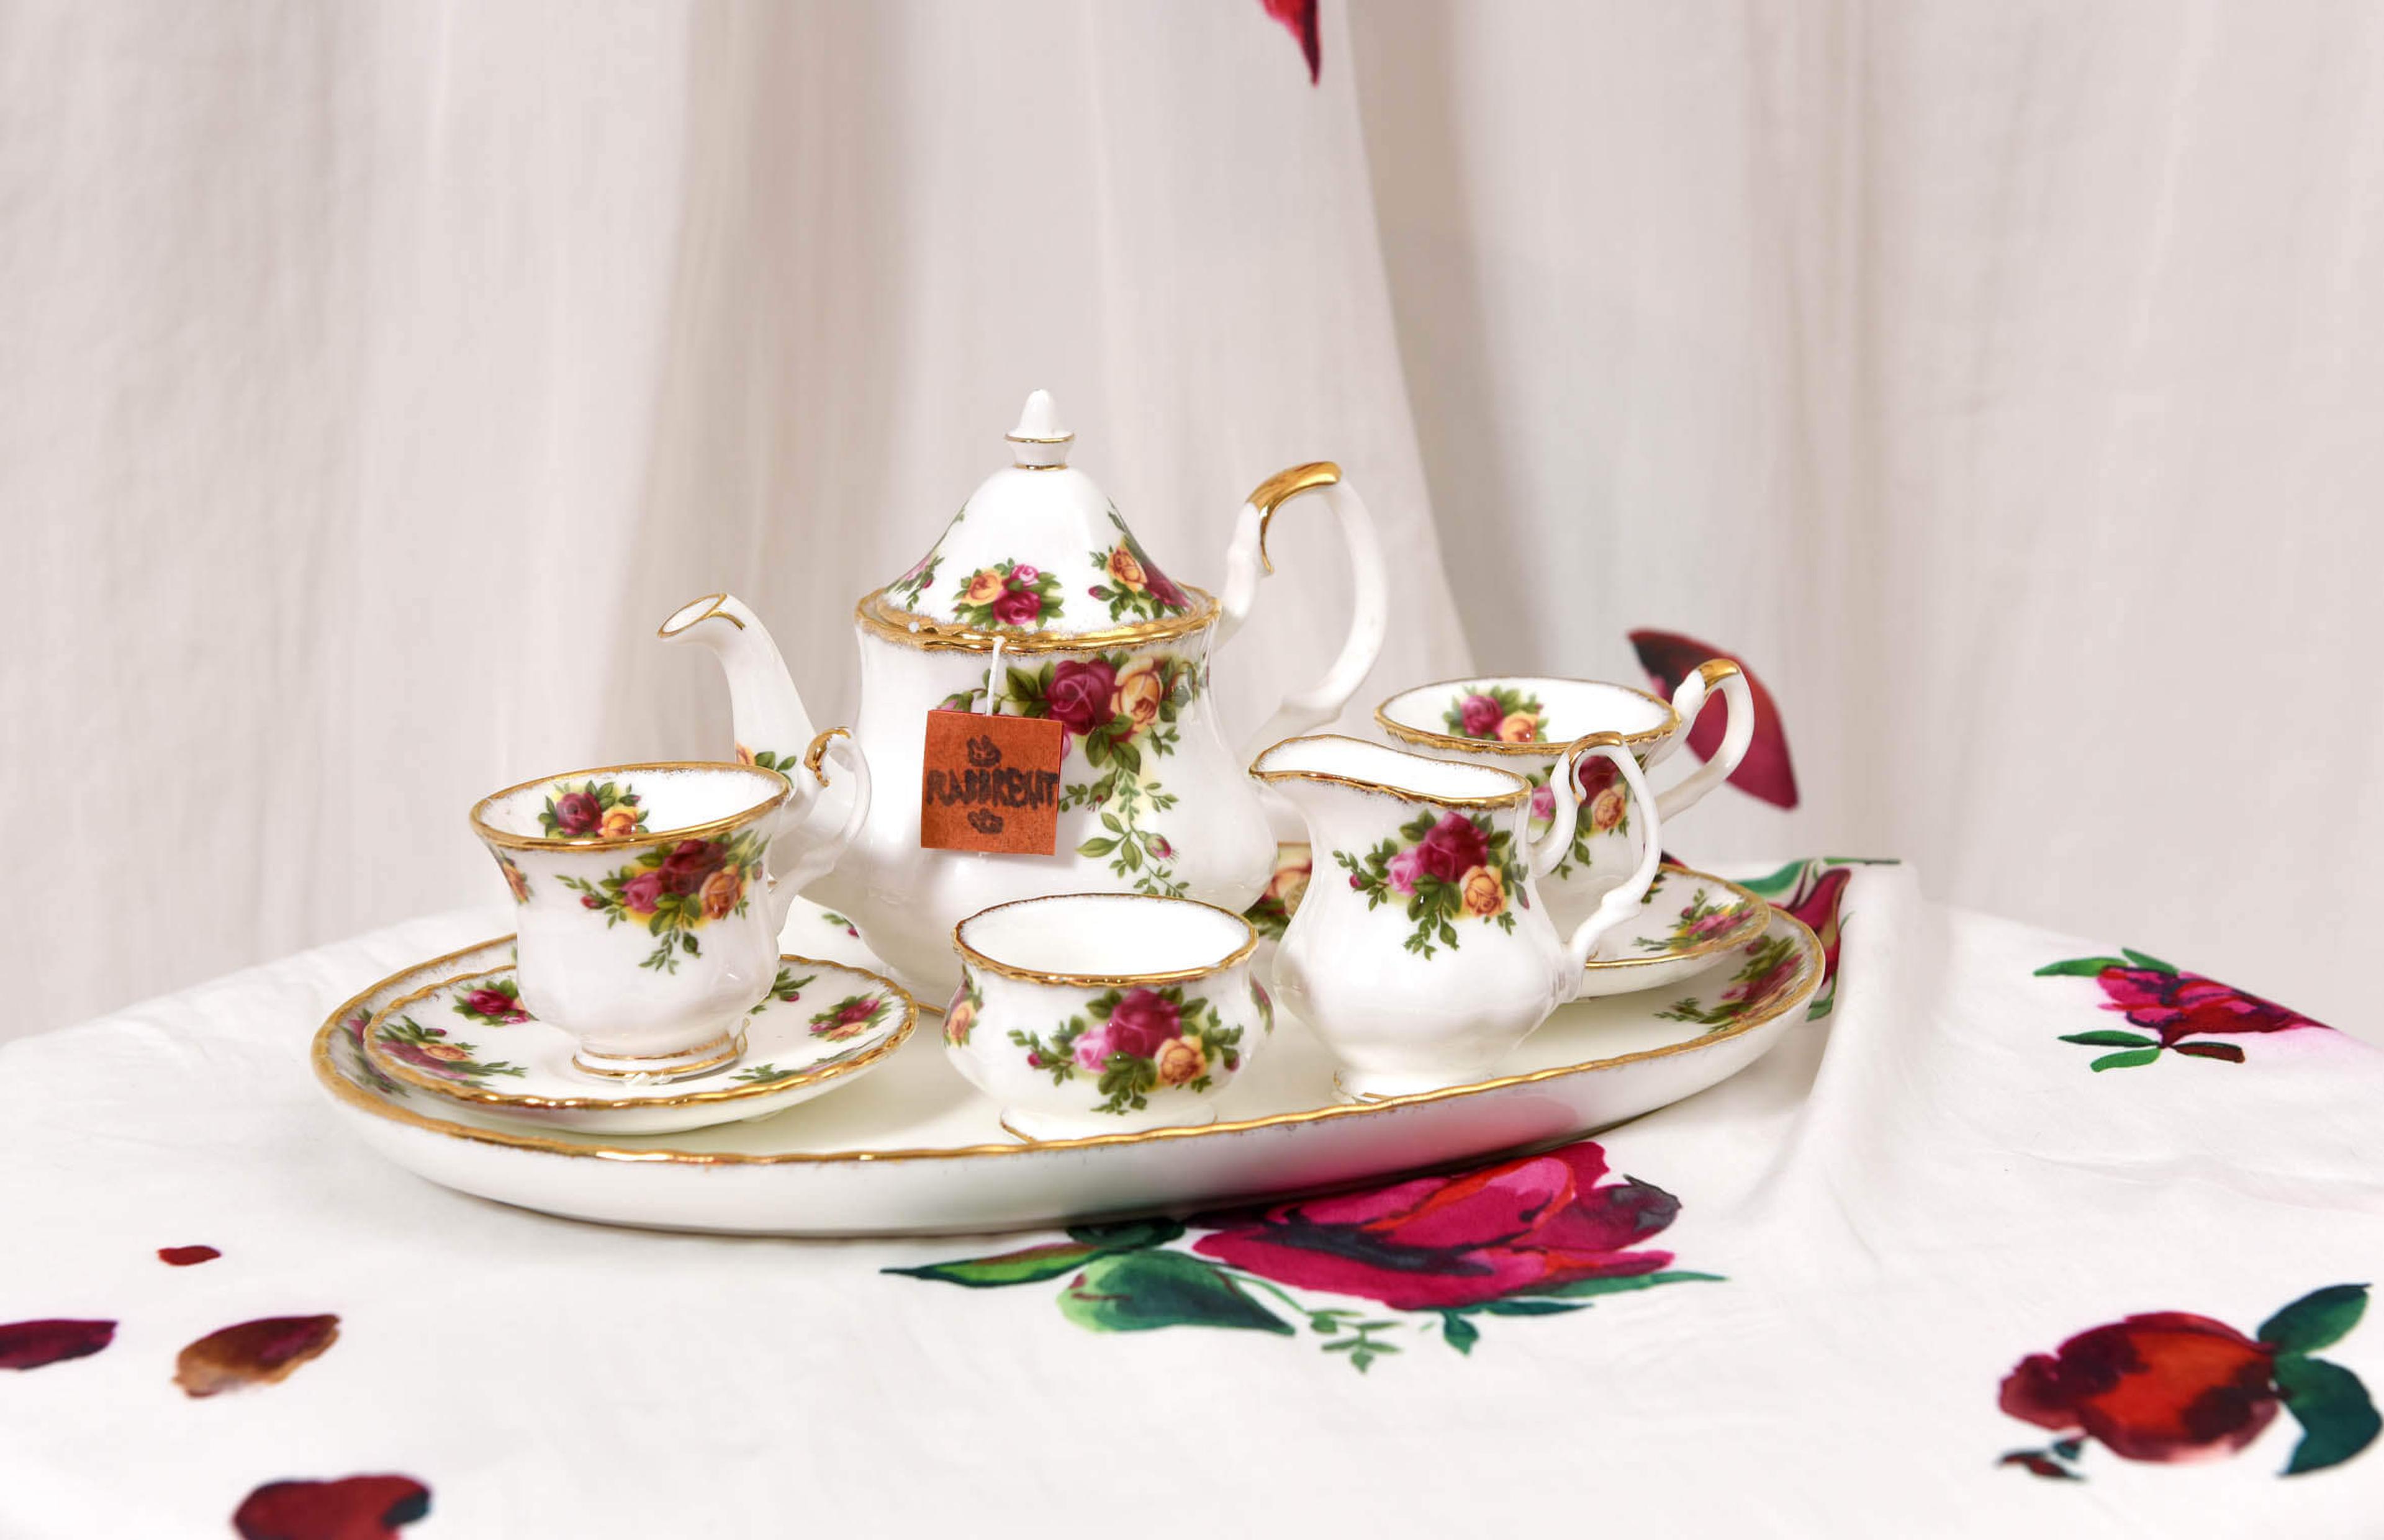 Display of an ornamental tea set arranged on a ha nd paianted table cloth hand